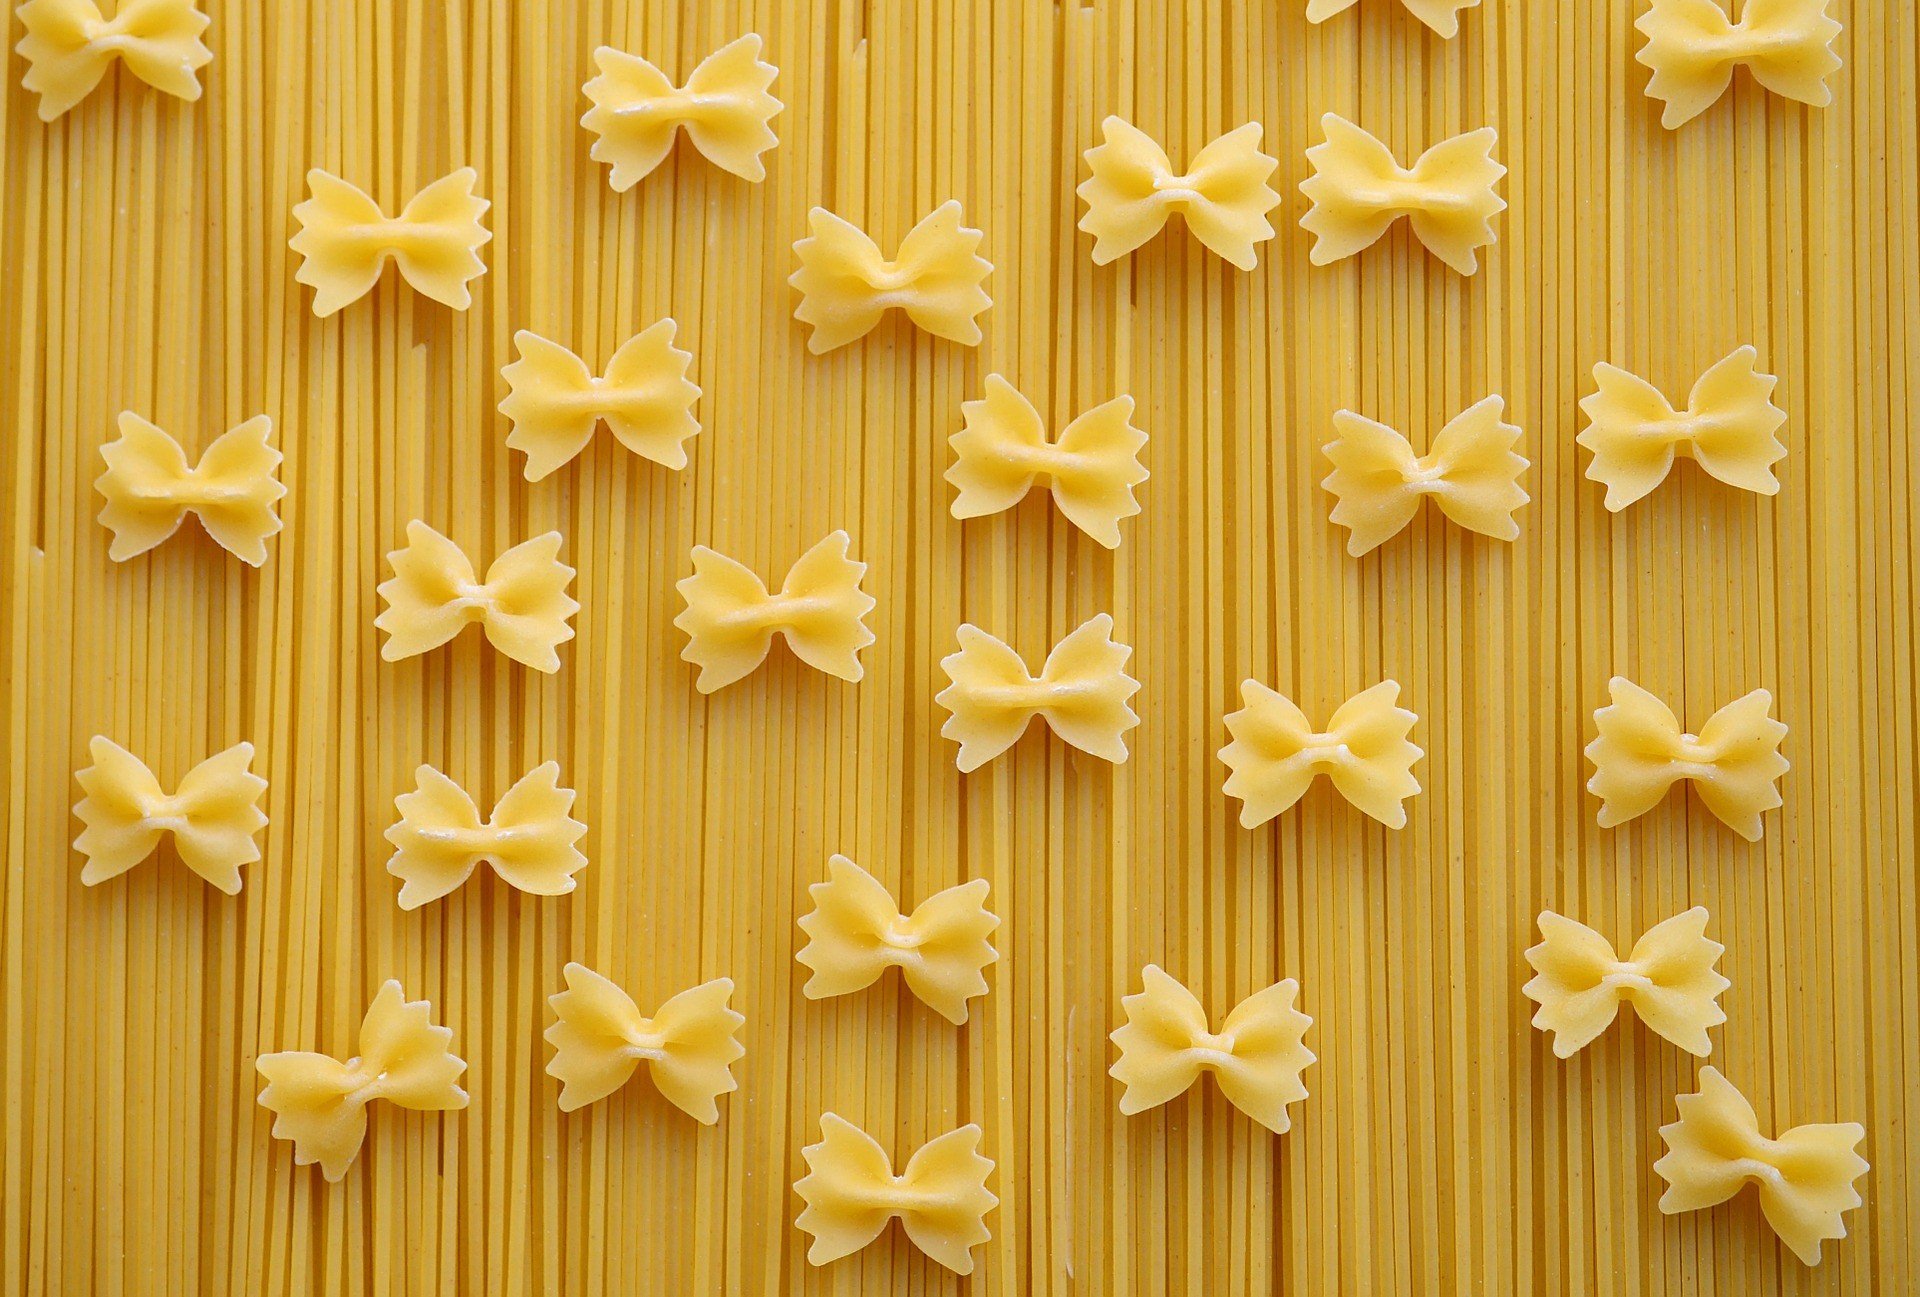 Pasta Makes You Fat: Myth Or Fact?